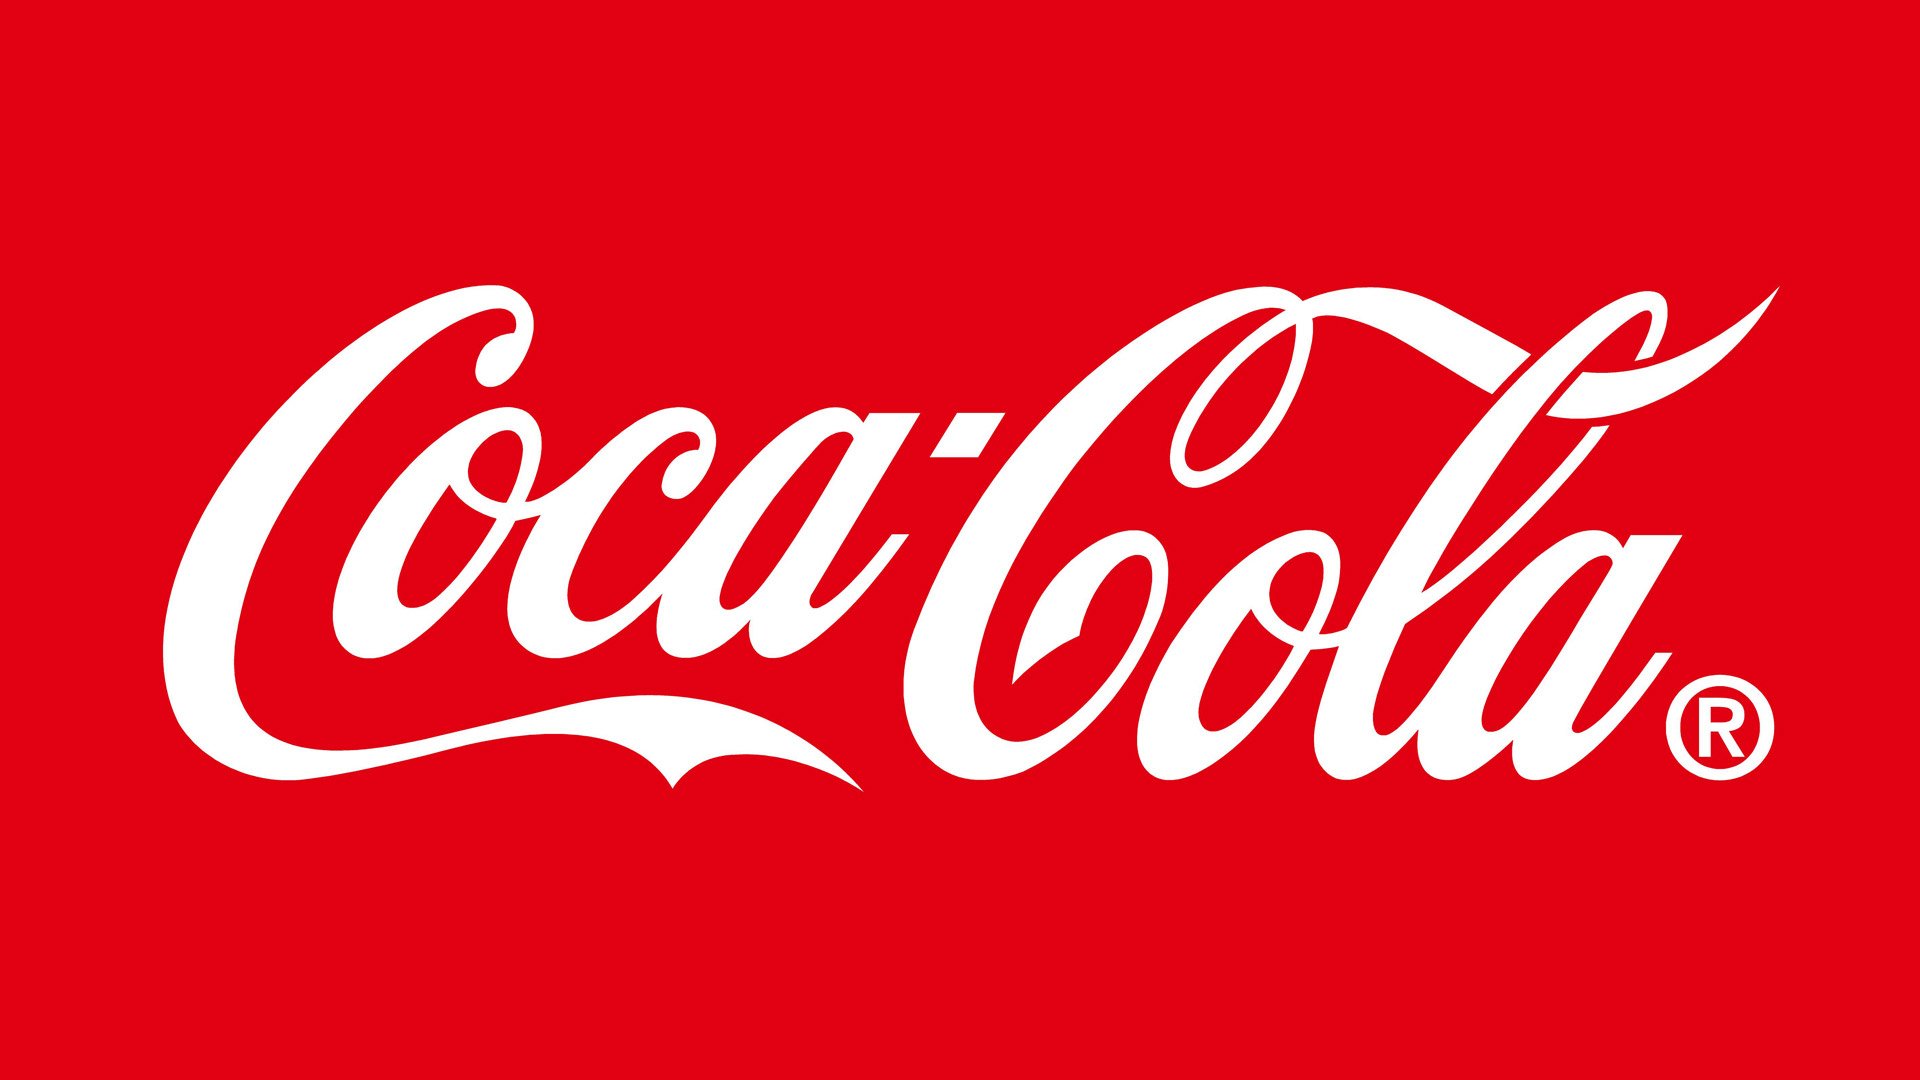 Coca Cola HD Wallpaper Background Image